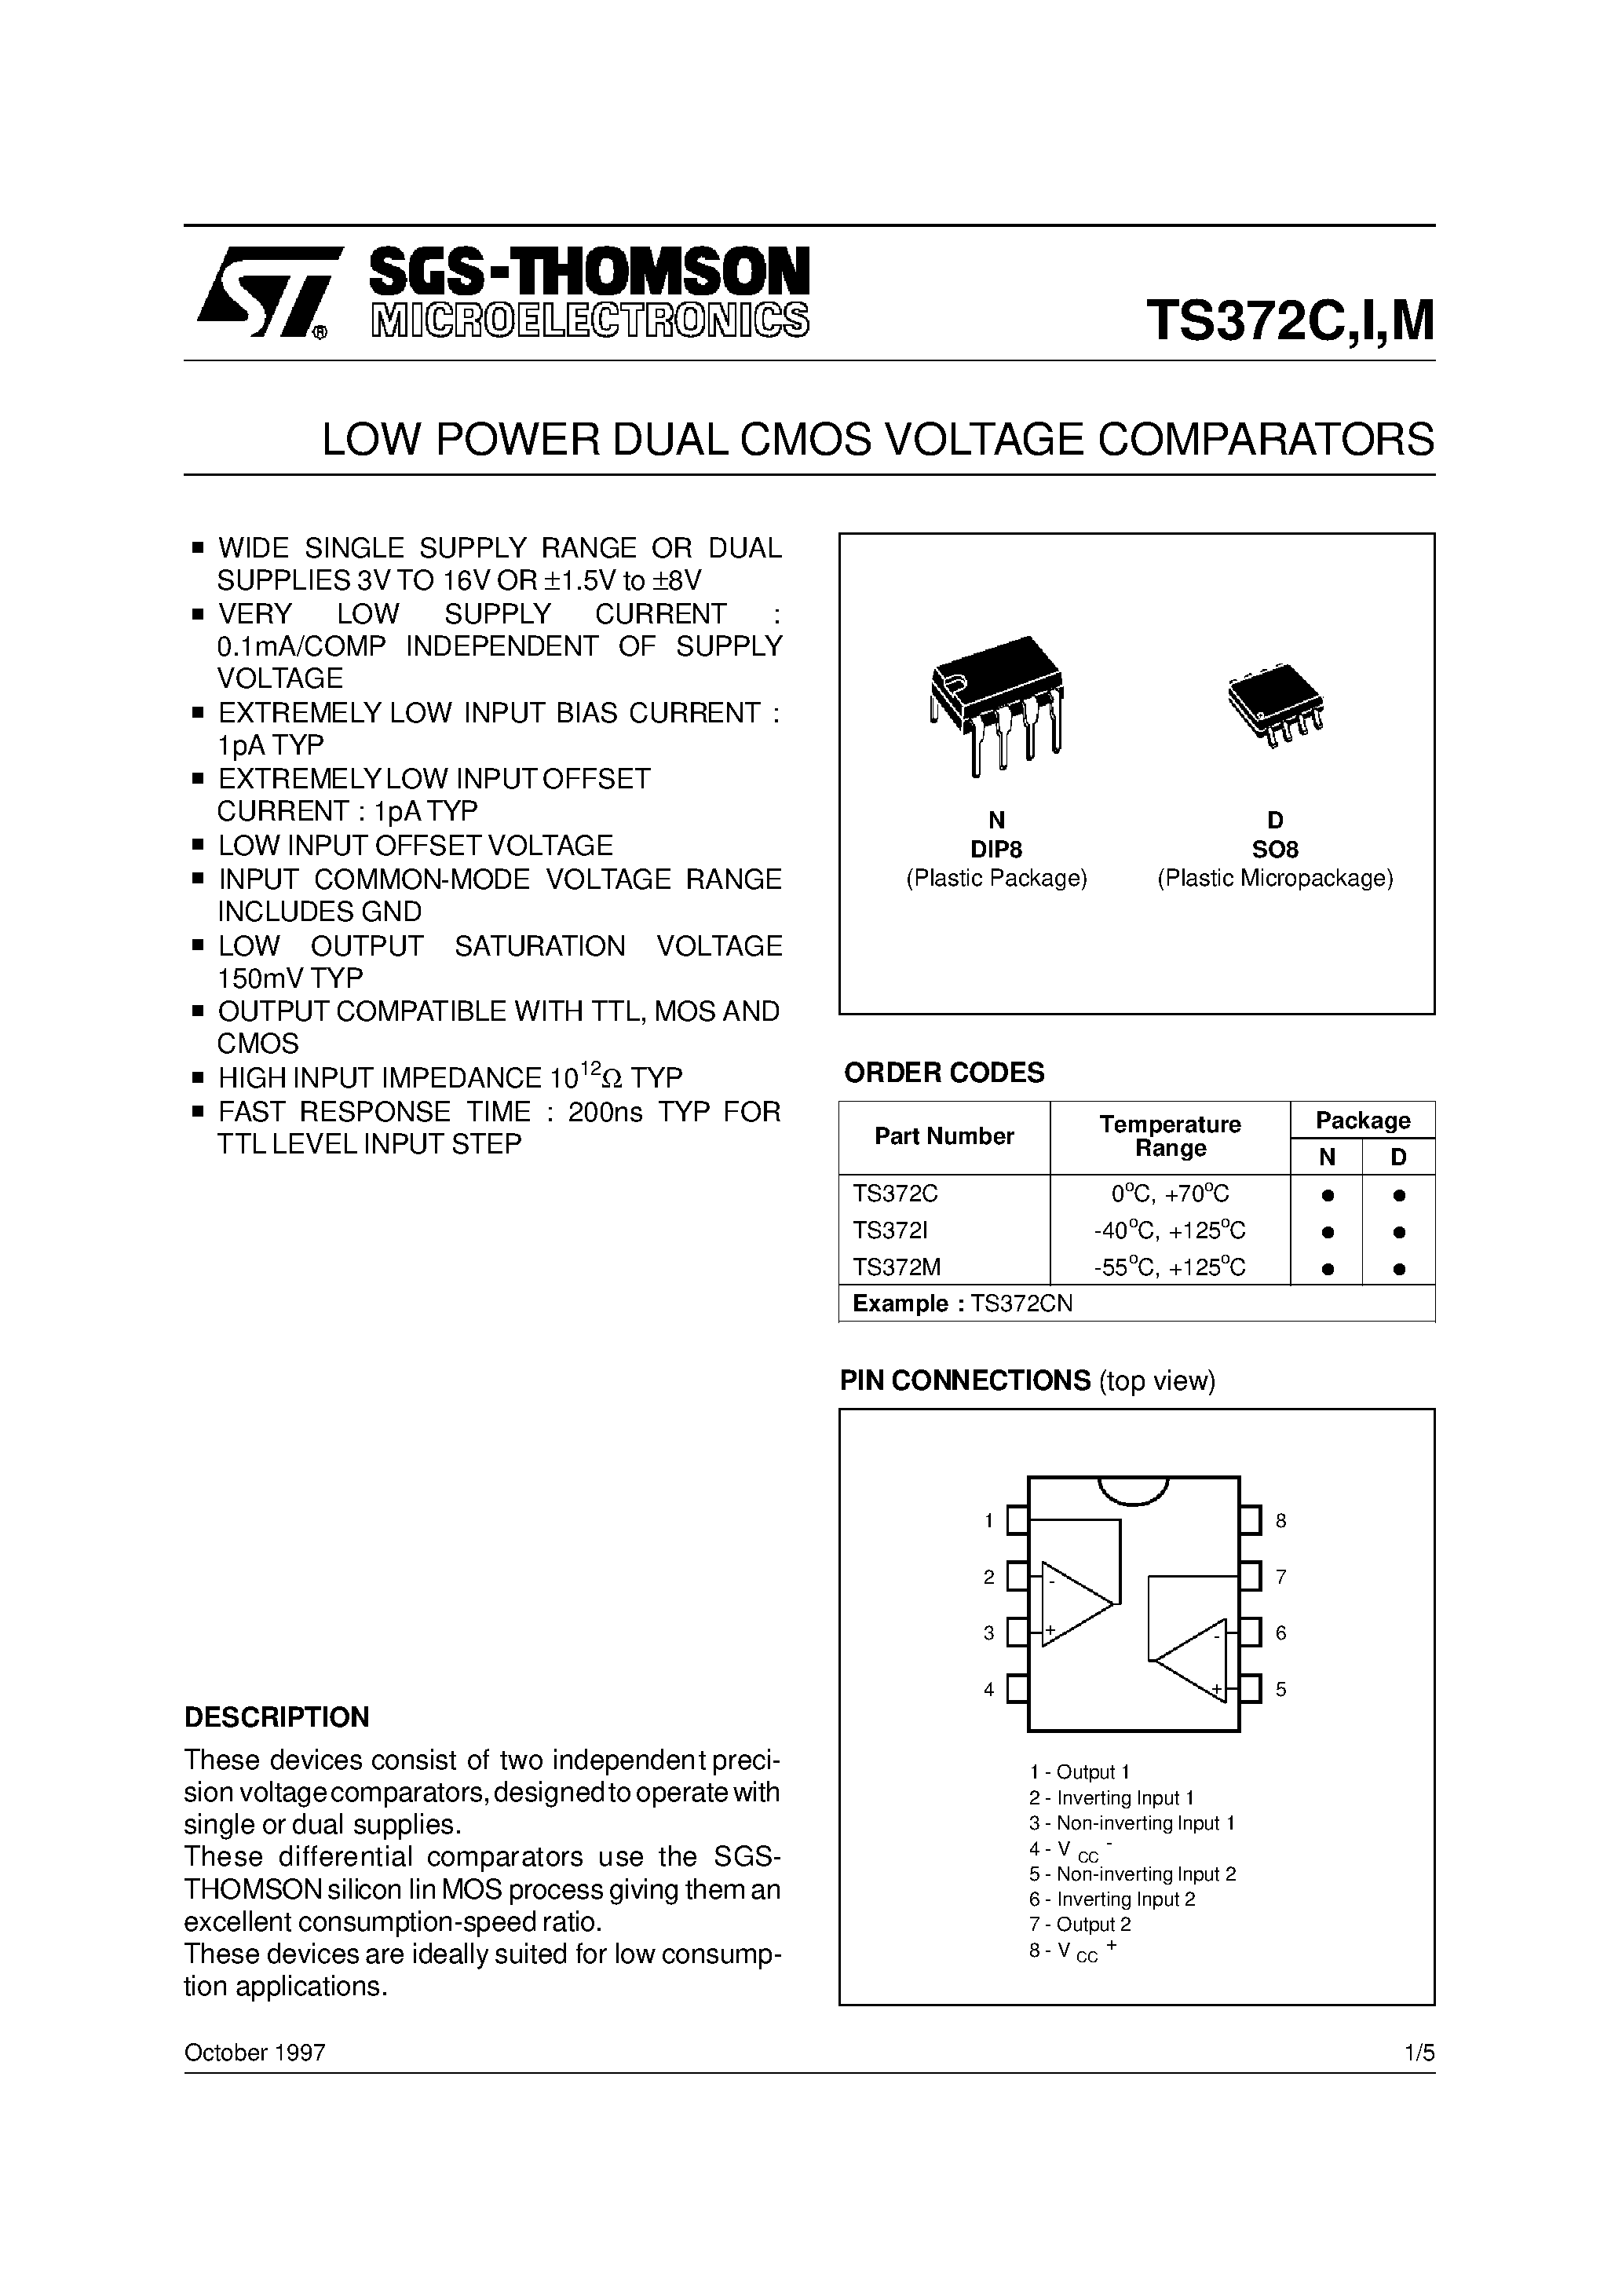 Даташит TS372M - LOW POWER DUAL CMOS VOLTAGE COMPARATORS страница 1